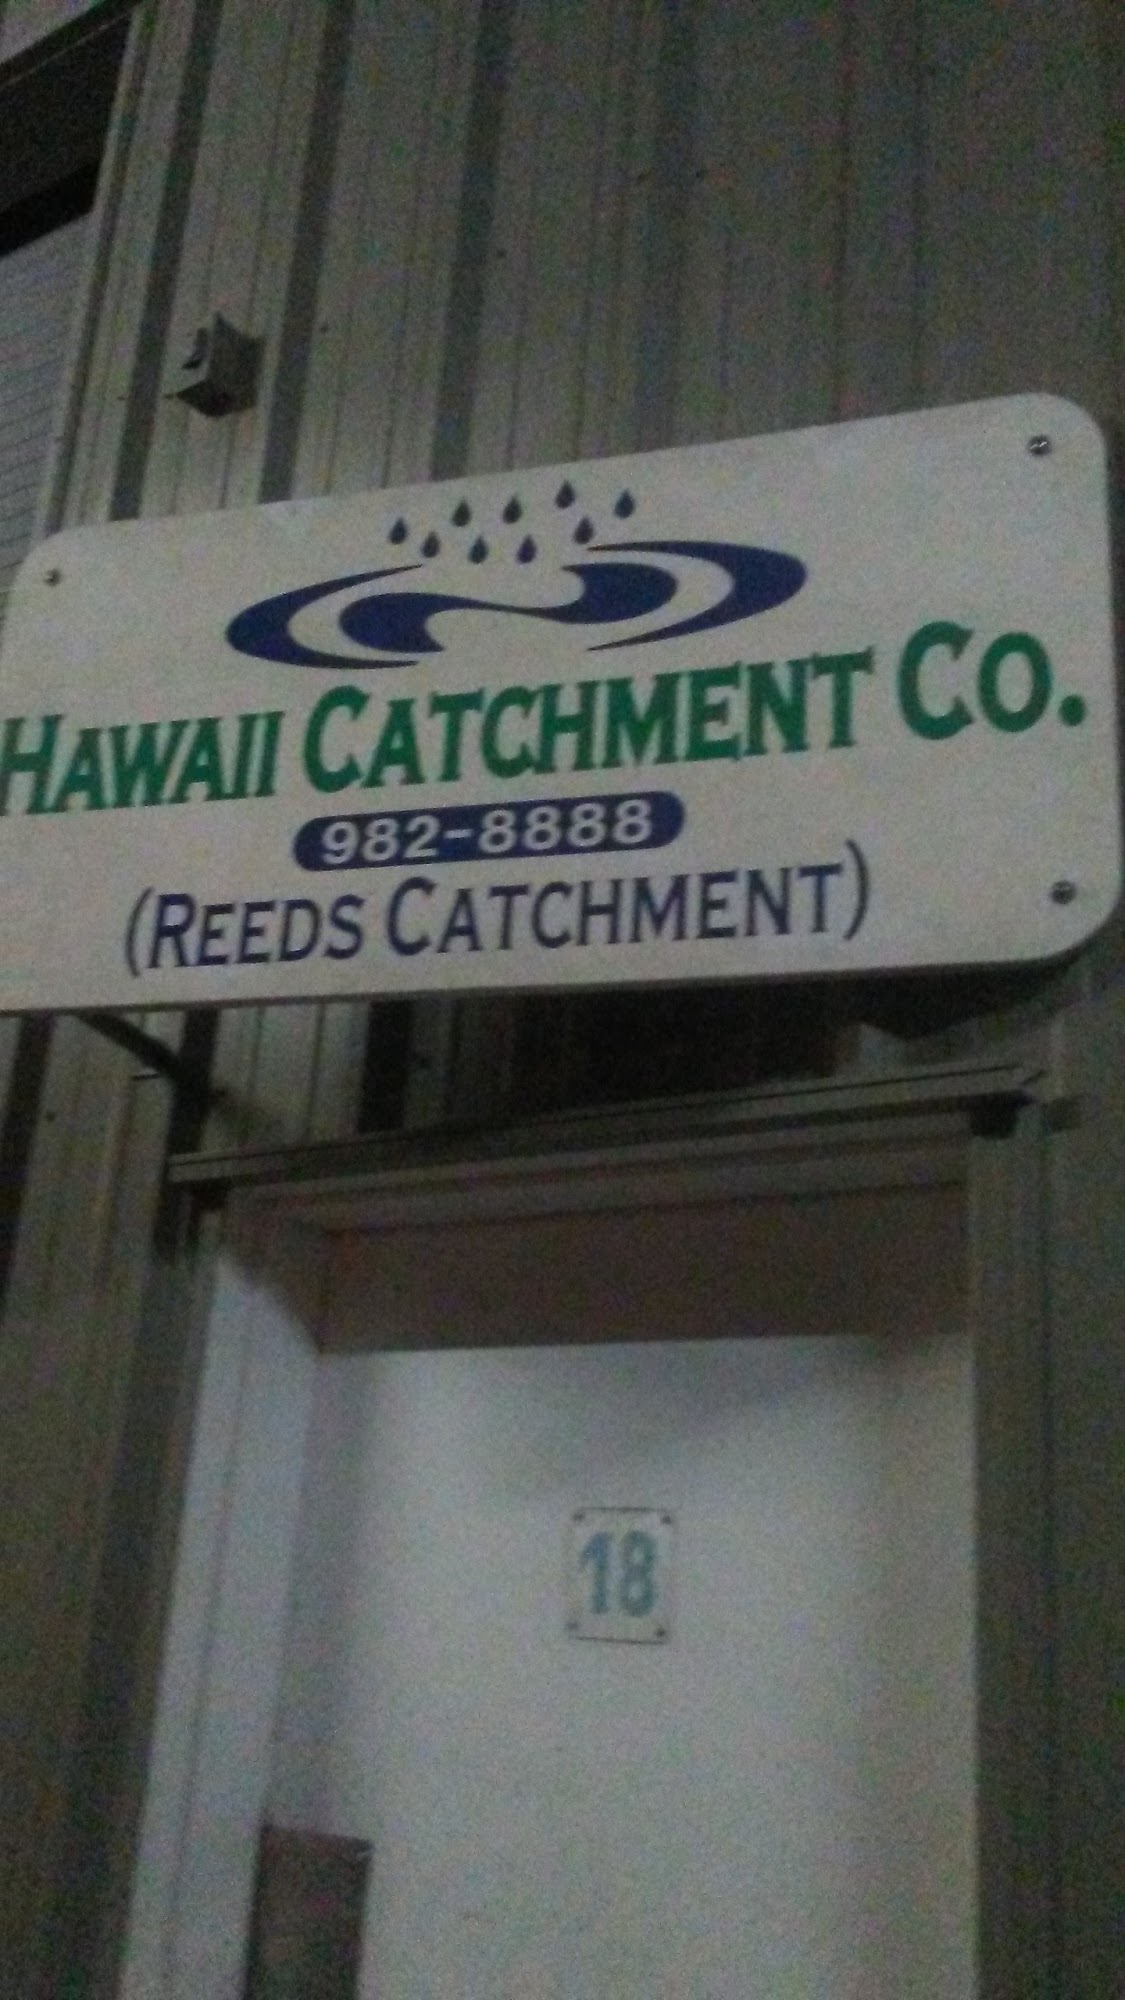 Hawaii Catchment Co-Reed's 16-643 Kipimana St # 19, Keaau Hawaii 96749